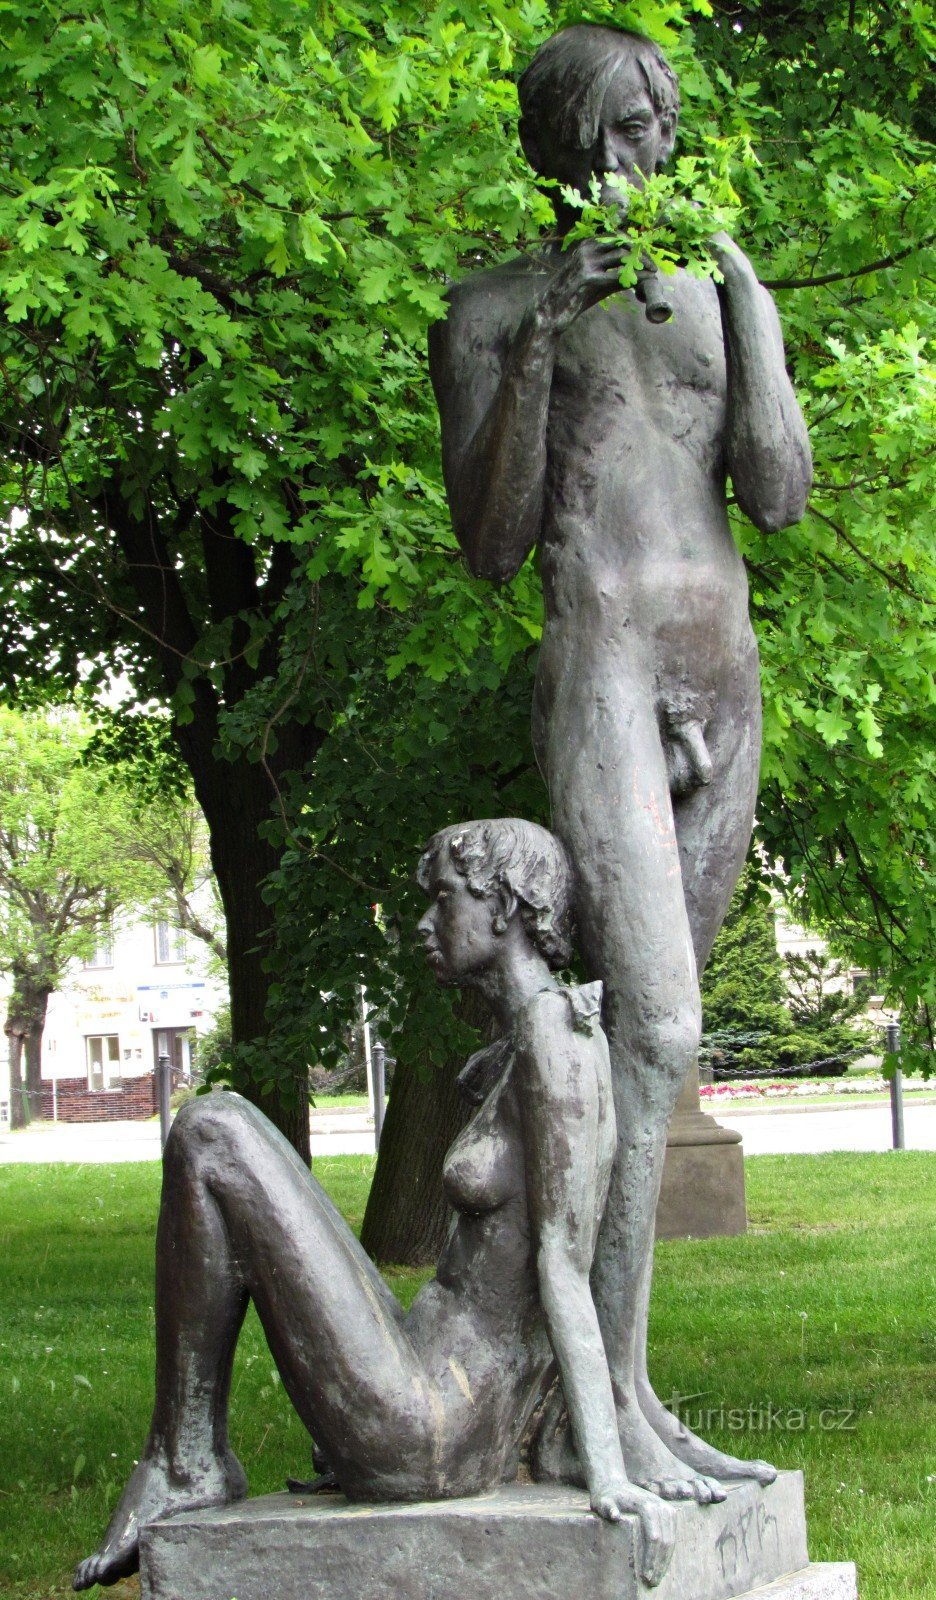 Třebíč - the statue of Music